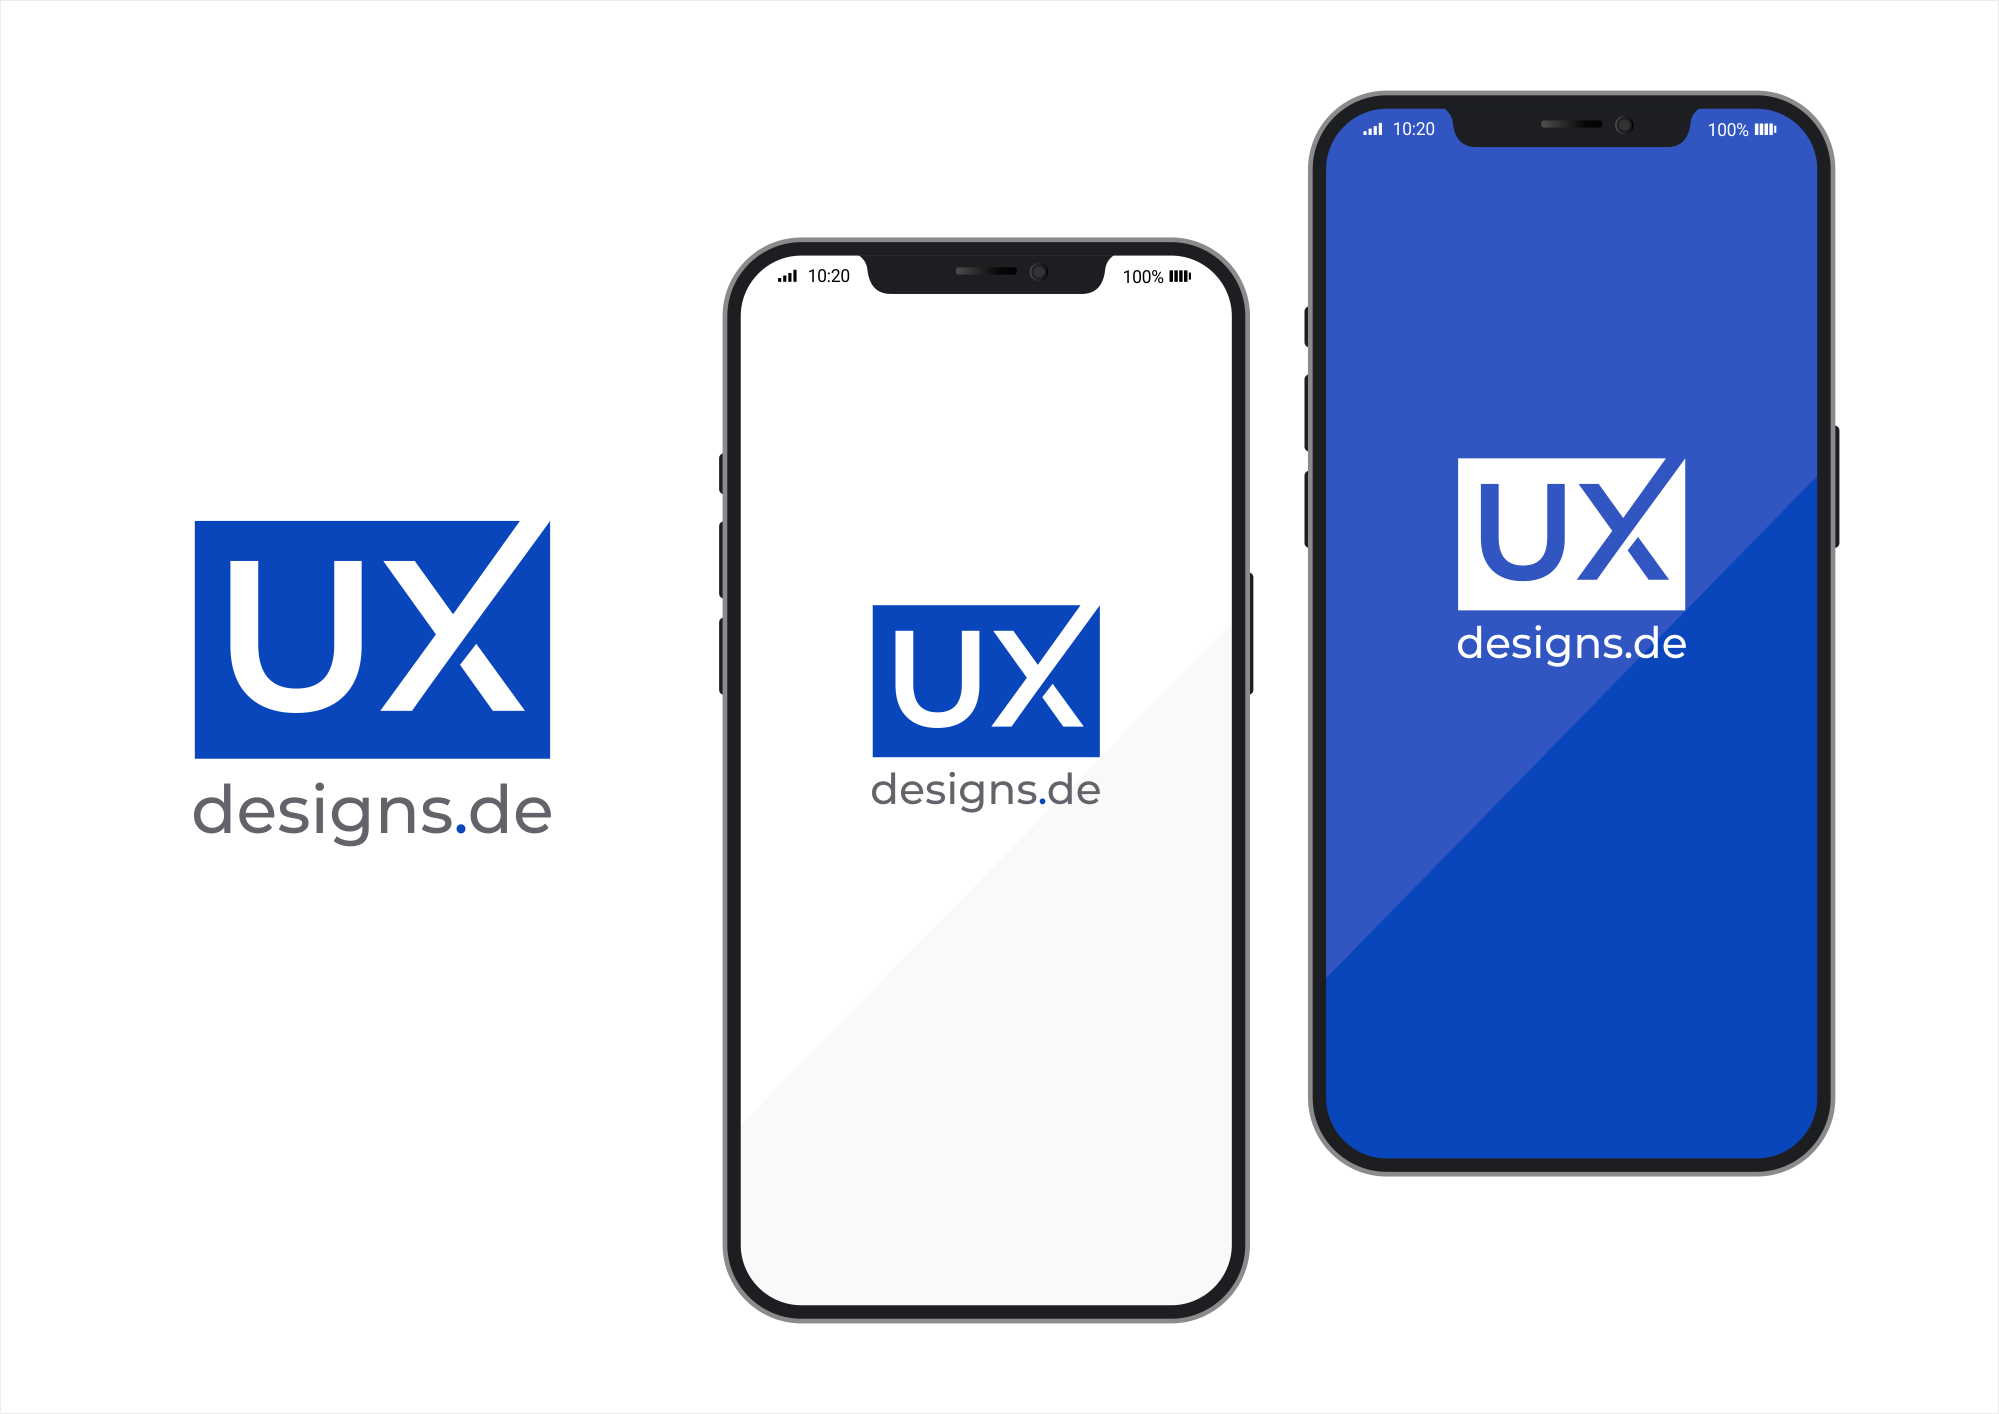 uxdesigns.de - Logo auf Smartphone. Design für Social Media.